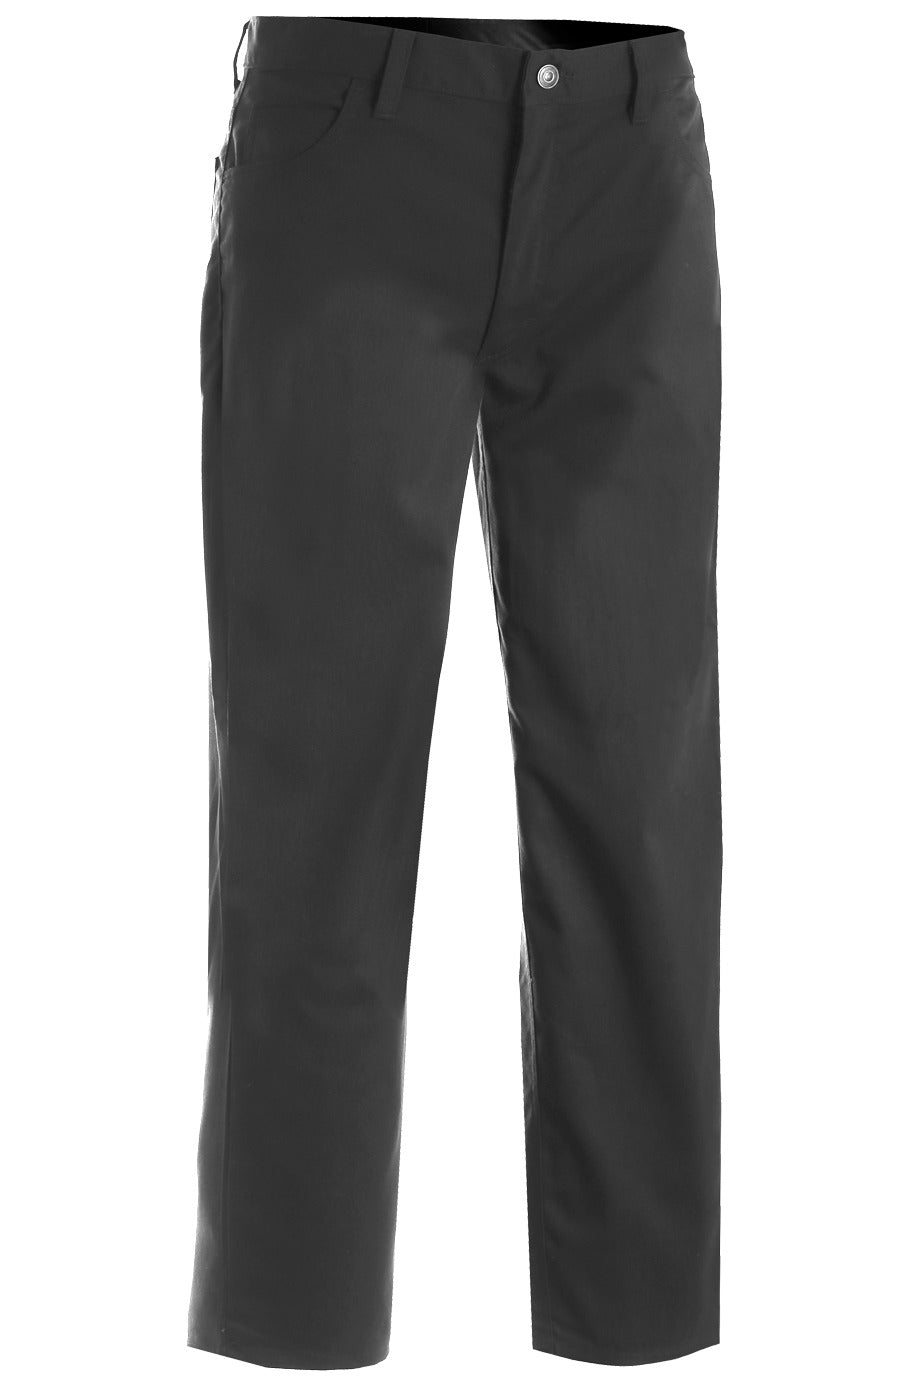 Men's Steel Grey Rugged Comfort Flat Front Pant – UniformsInStock.com